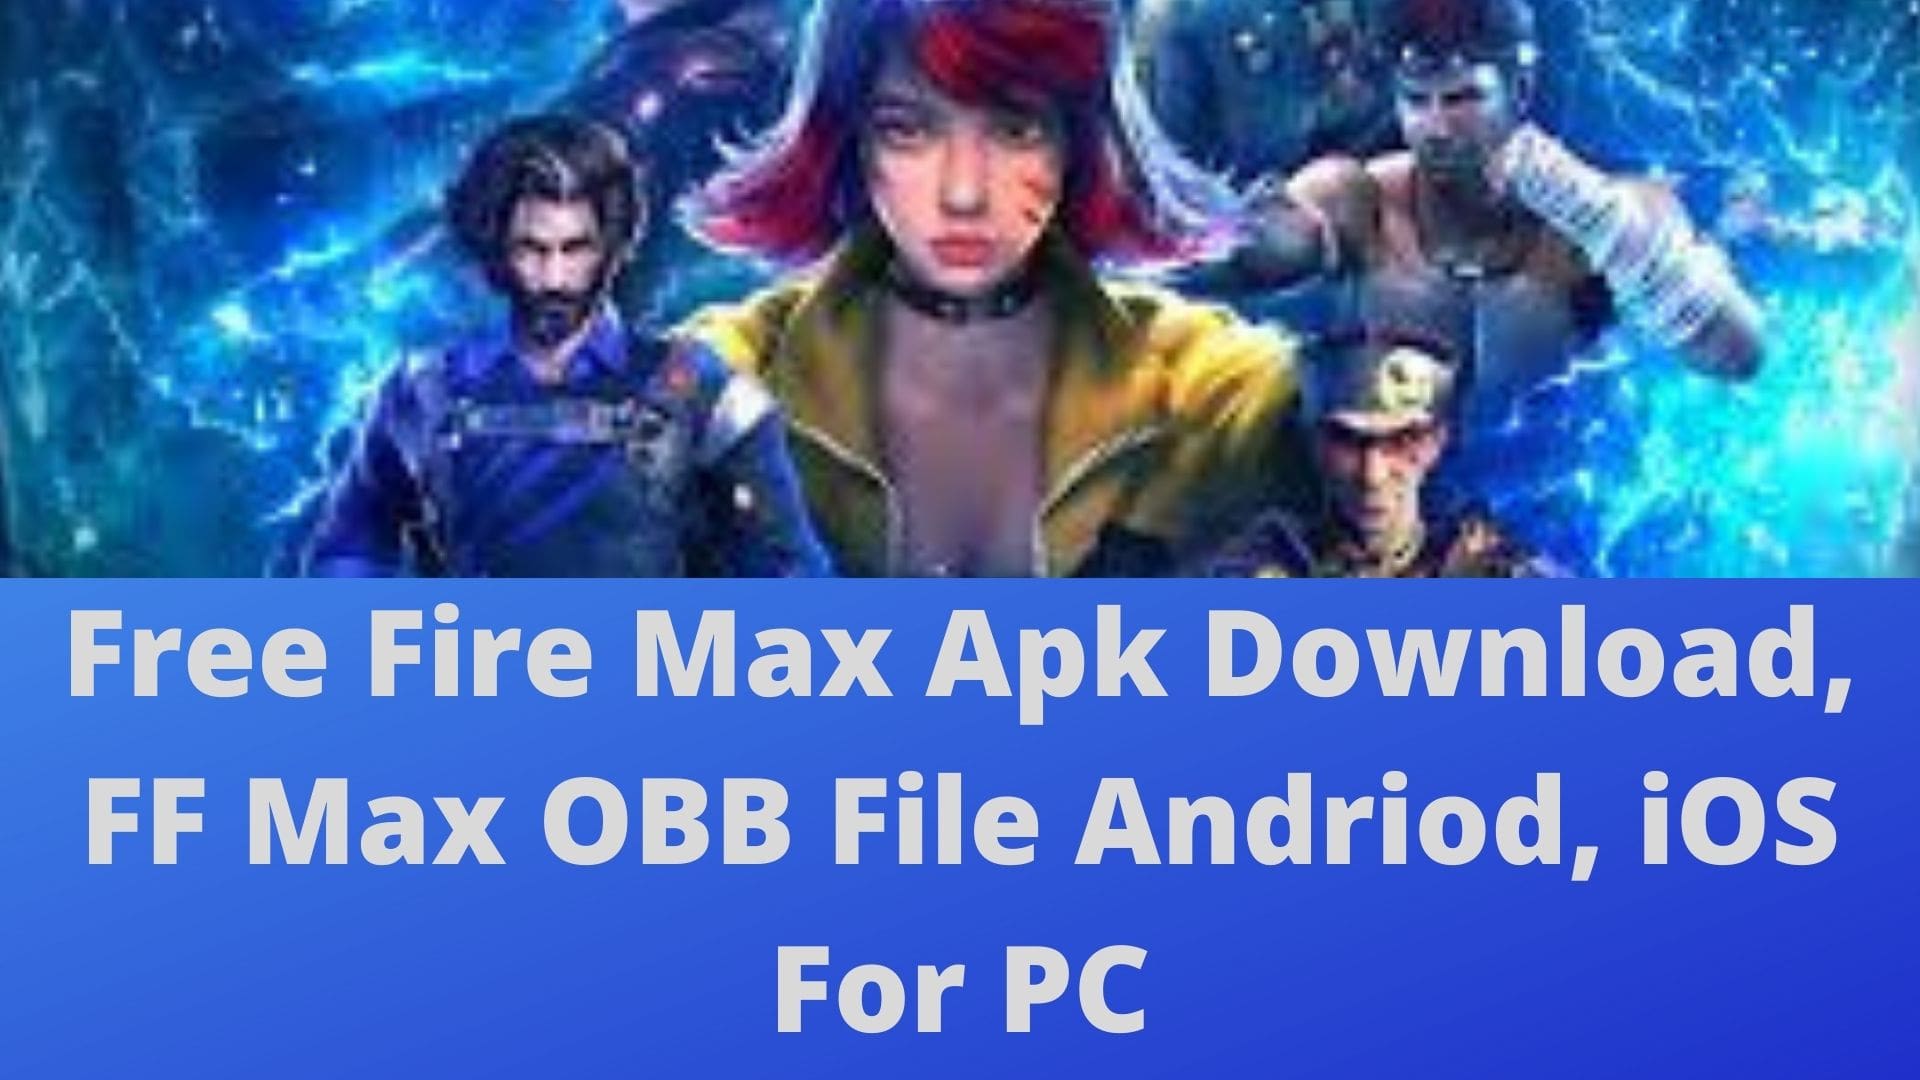 Free Fire Max Apk Download